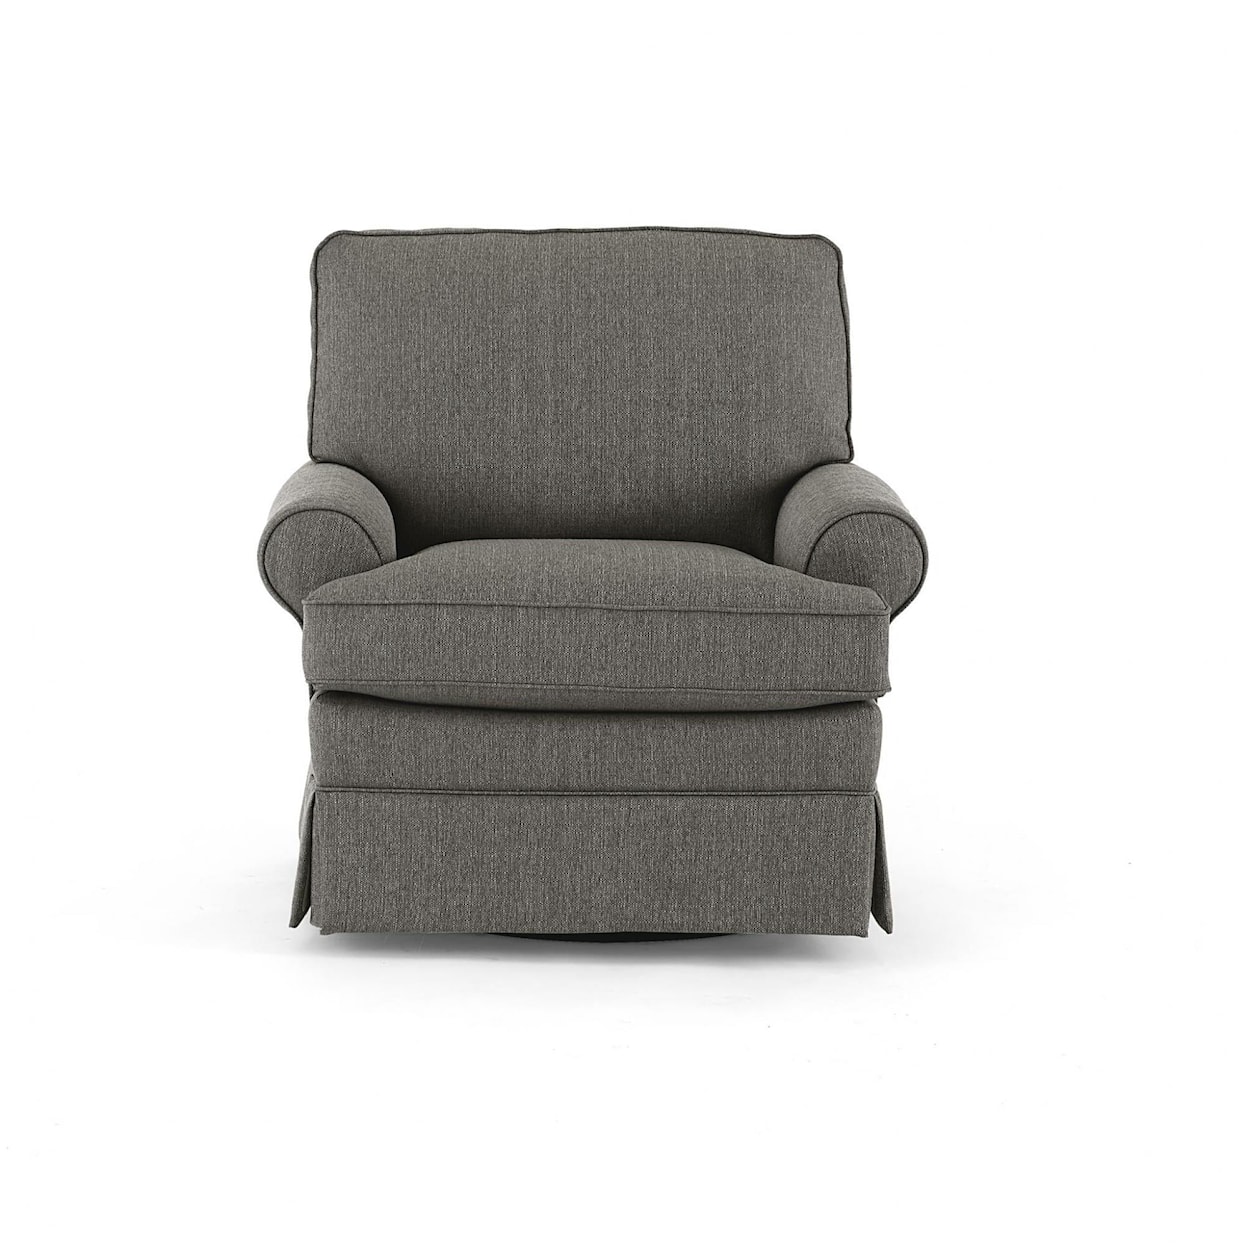 Bravo Furniture Quinn Swivel Glider Chair with Welt Cord Trim